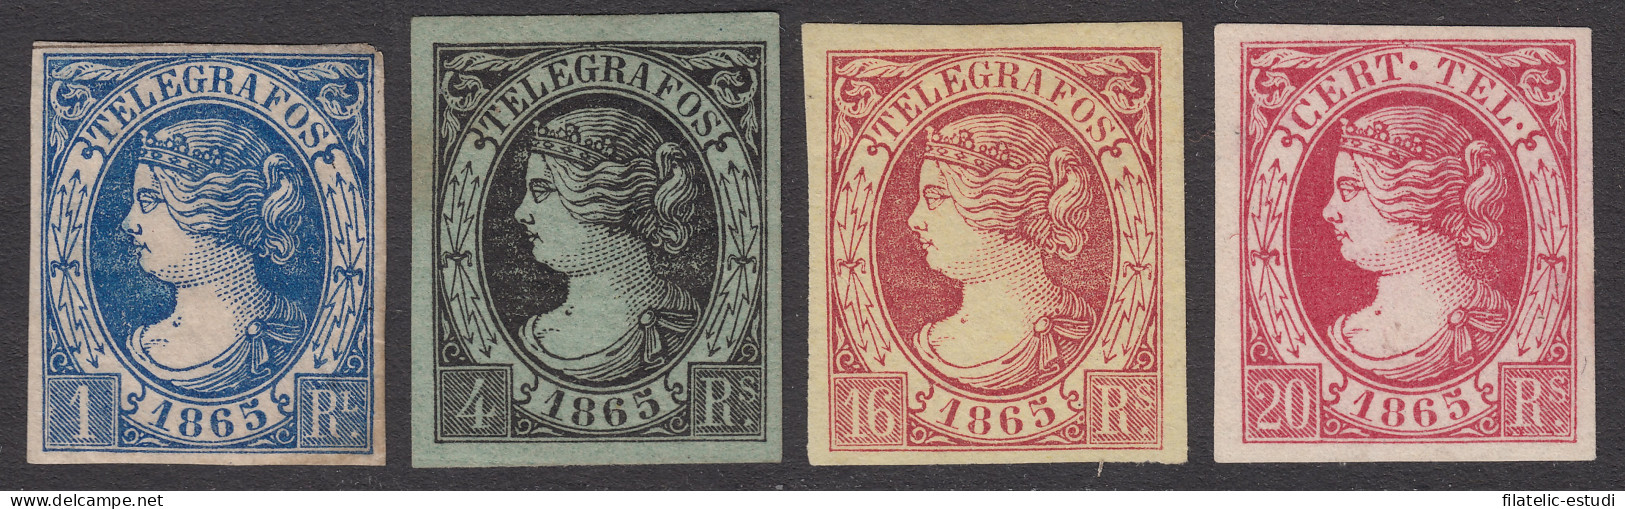 España Spain Telégrafos 5/8 1865 Isabel II  MH - Postage-Revenue Stamps